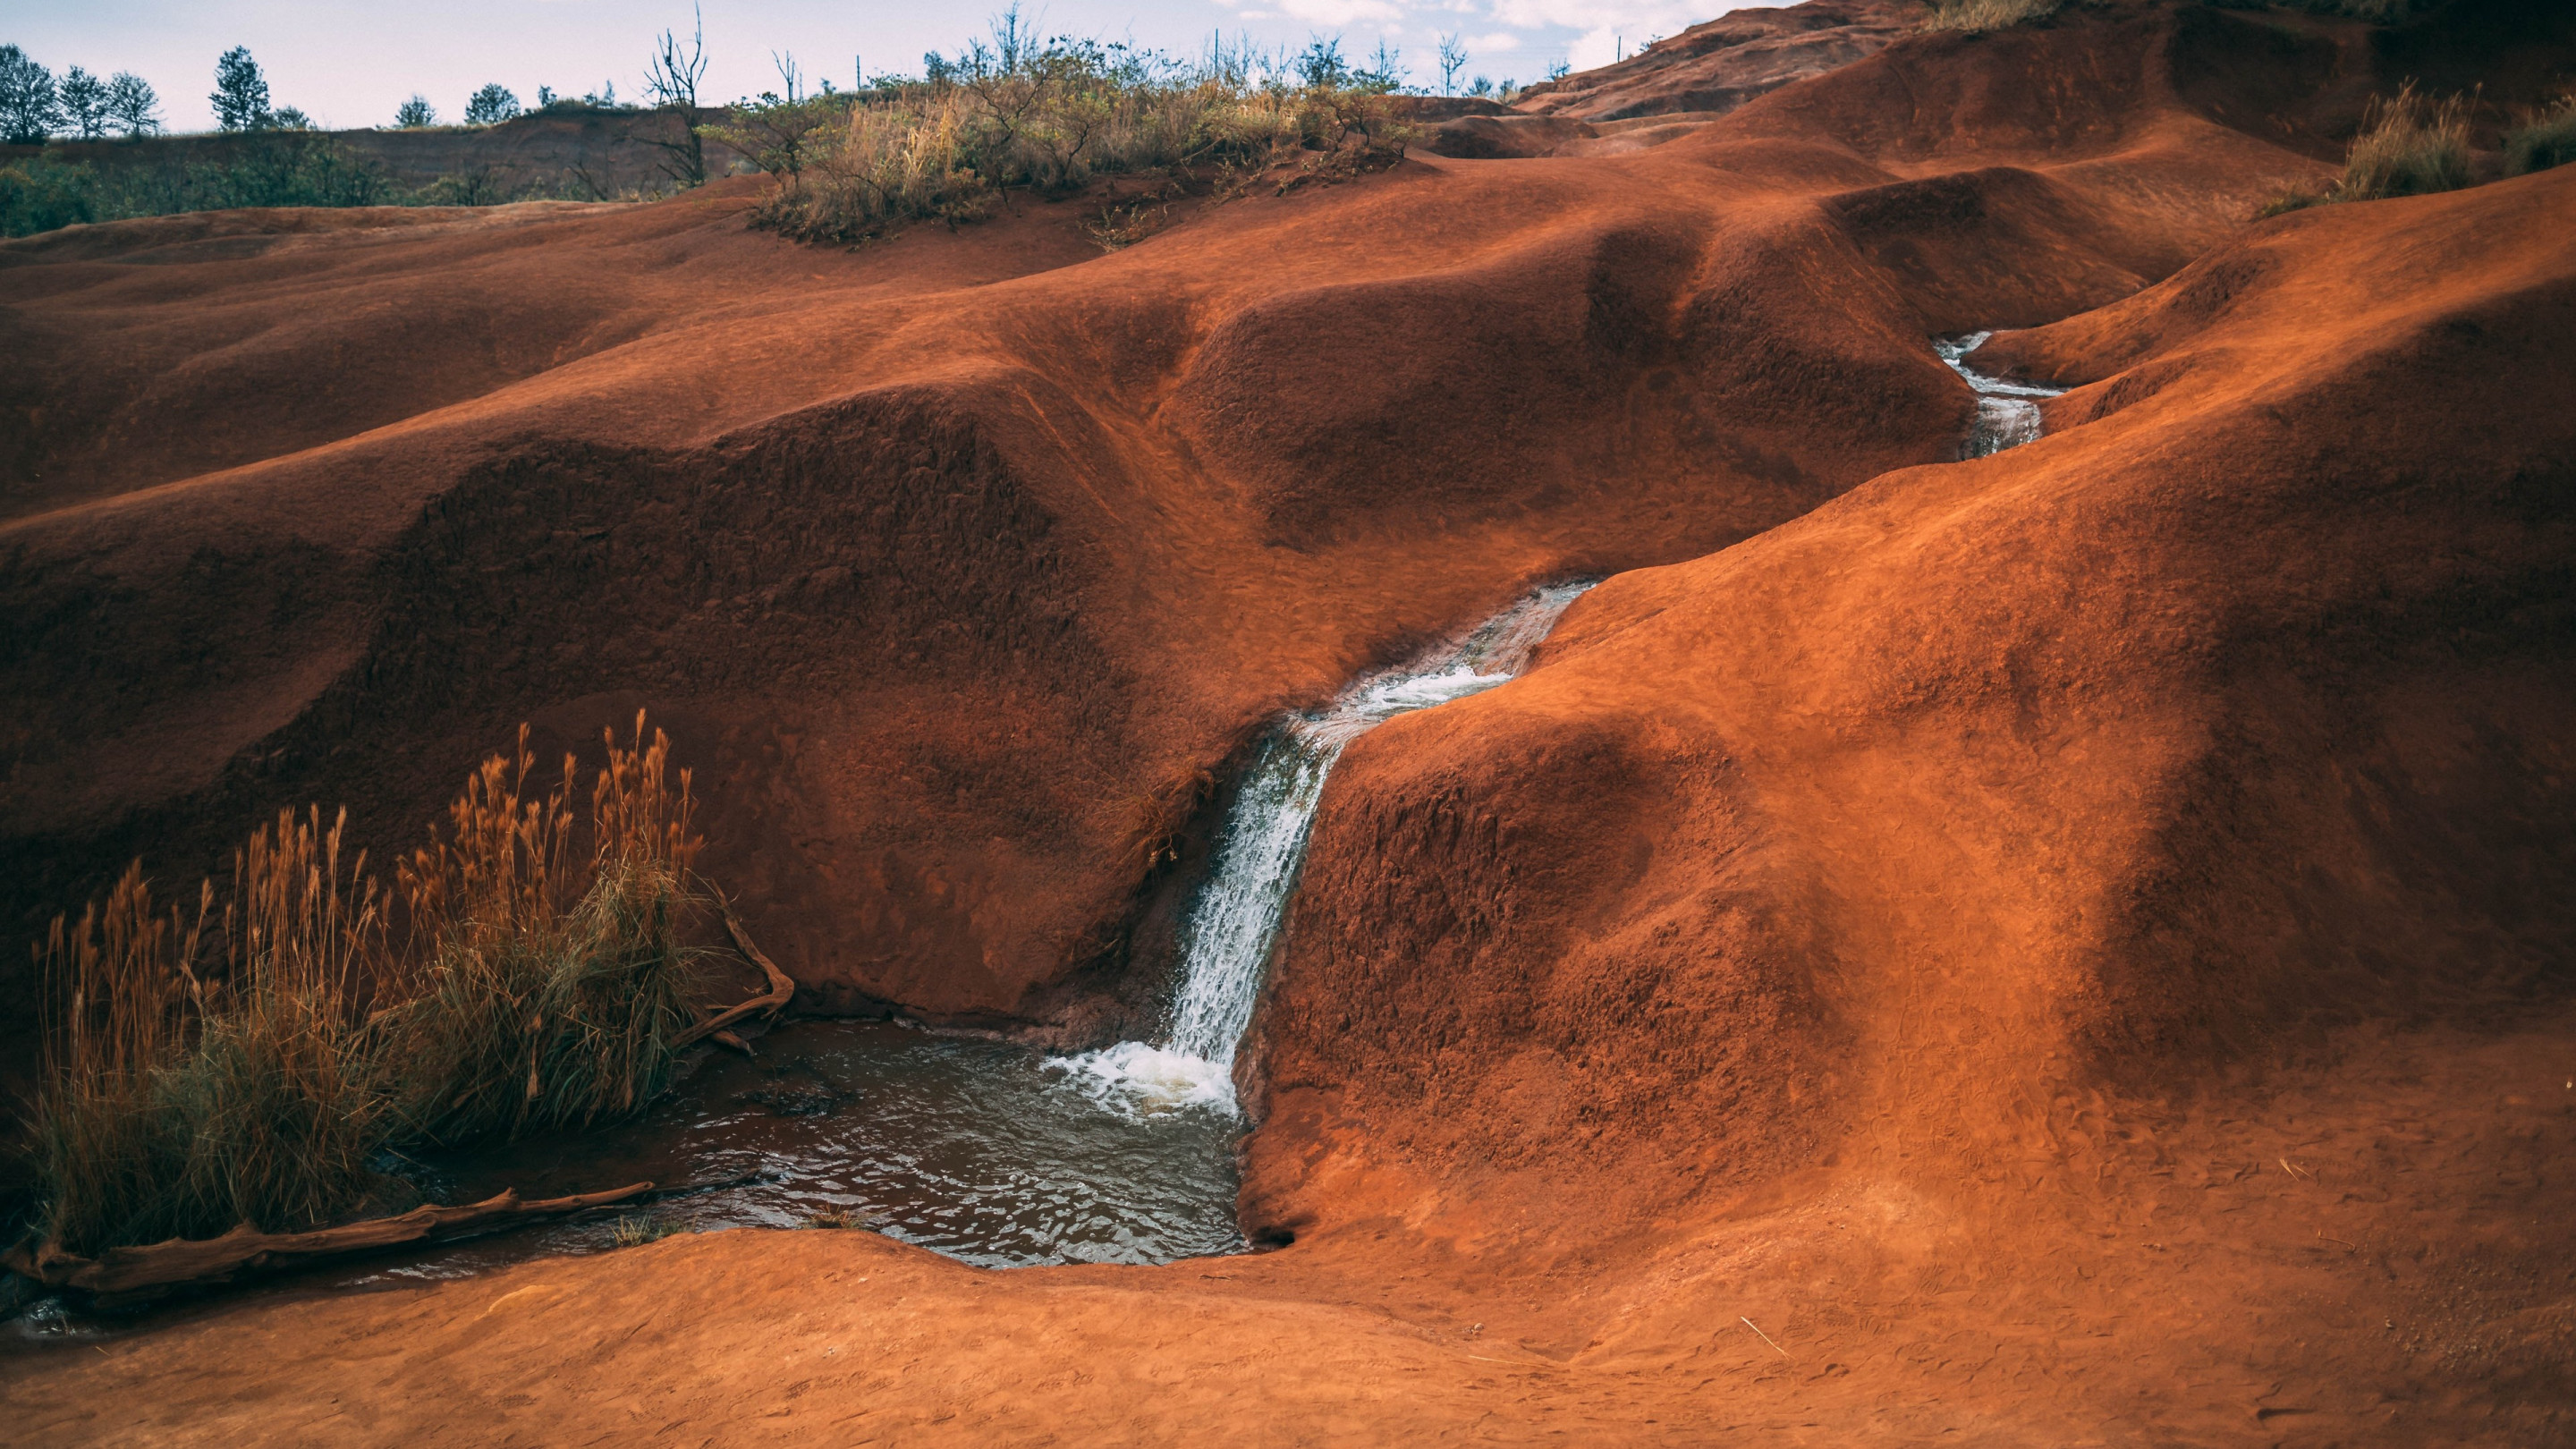 Waterfall in the arid landscape wallpaper 2880x1620